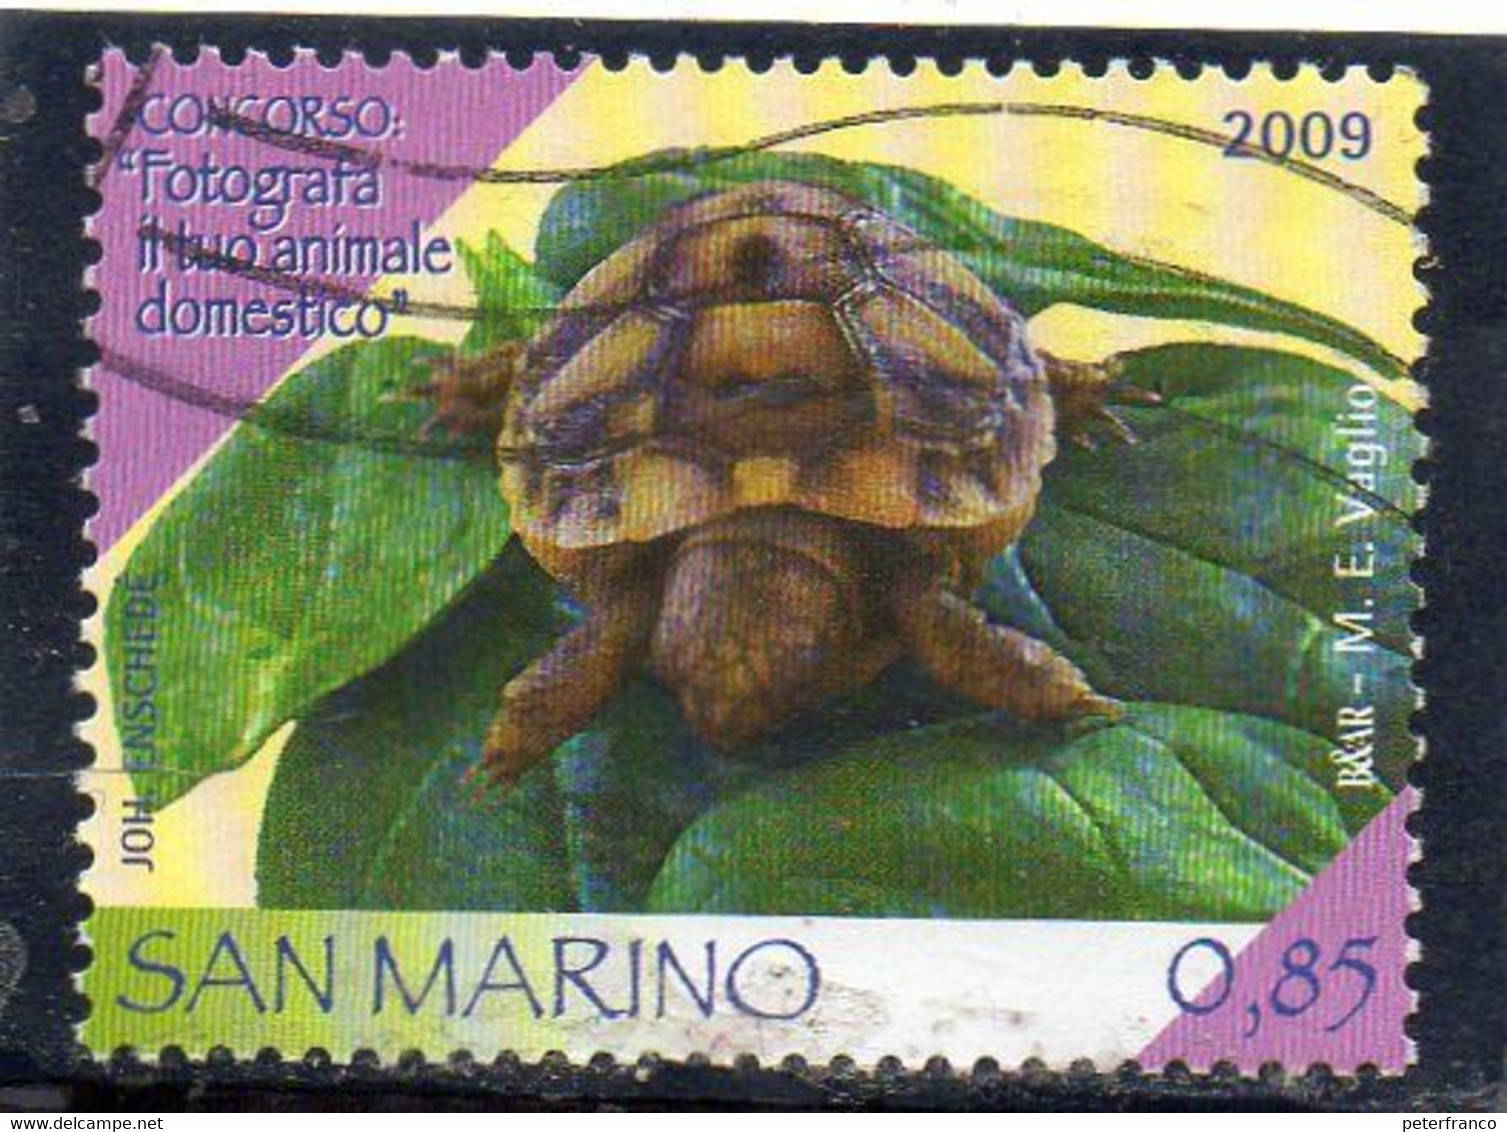 2009 San Marino - Concorso Fotografia Animale Domestico - Usados